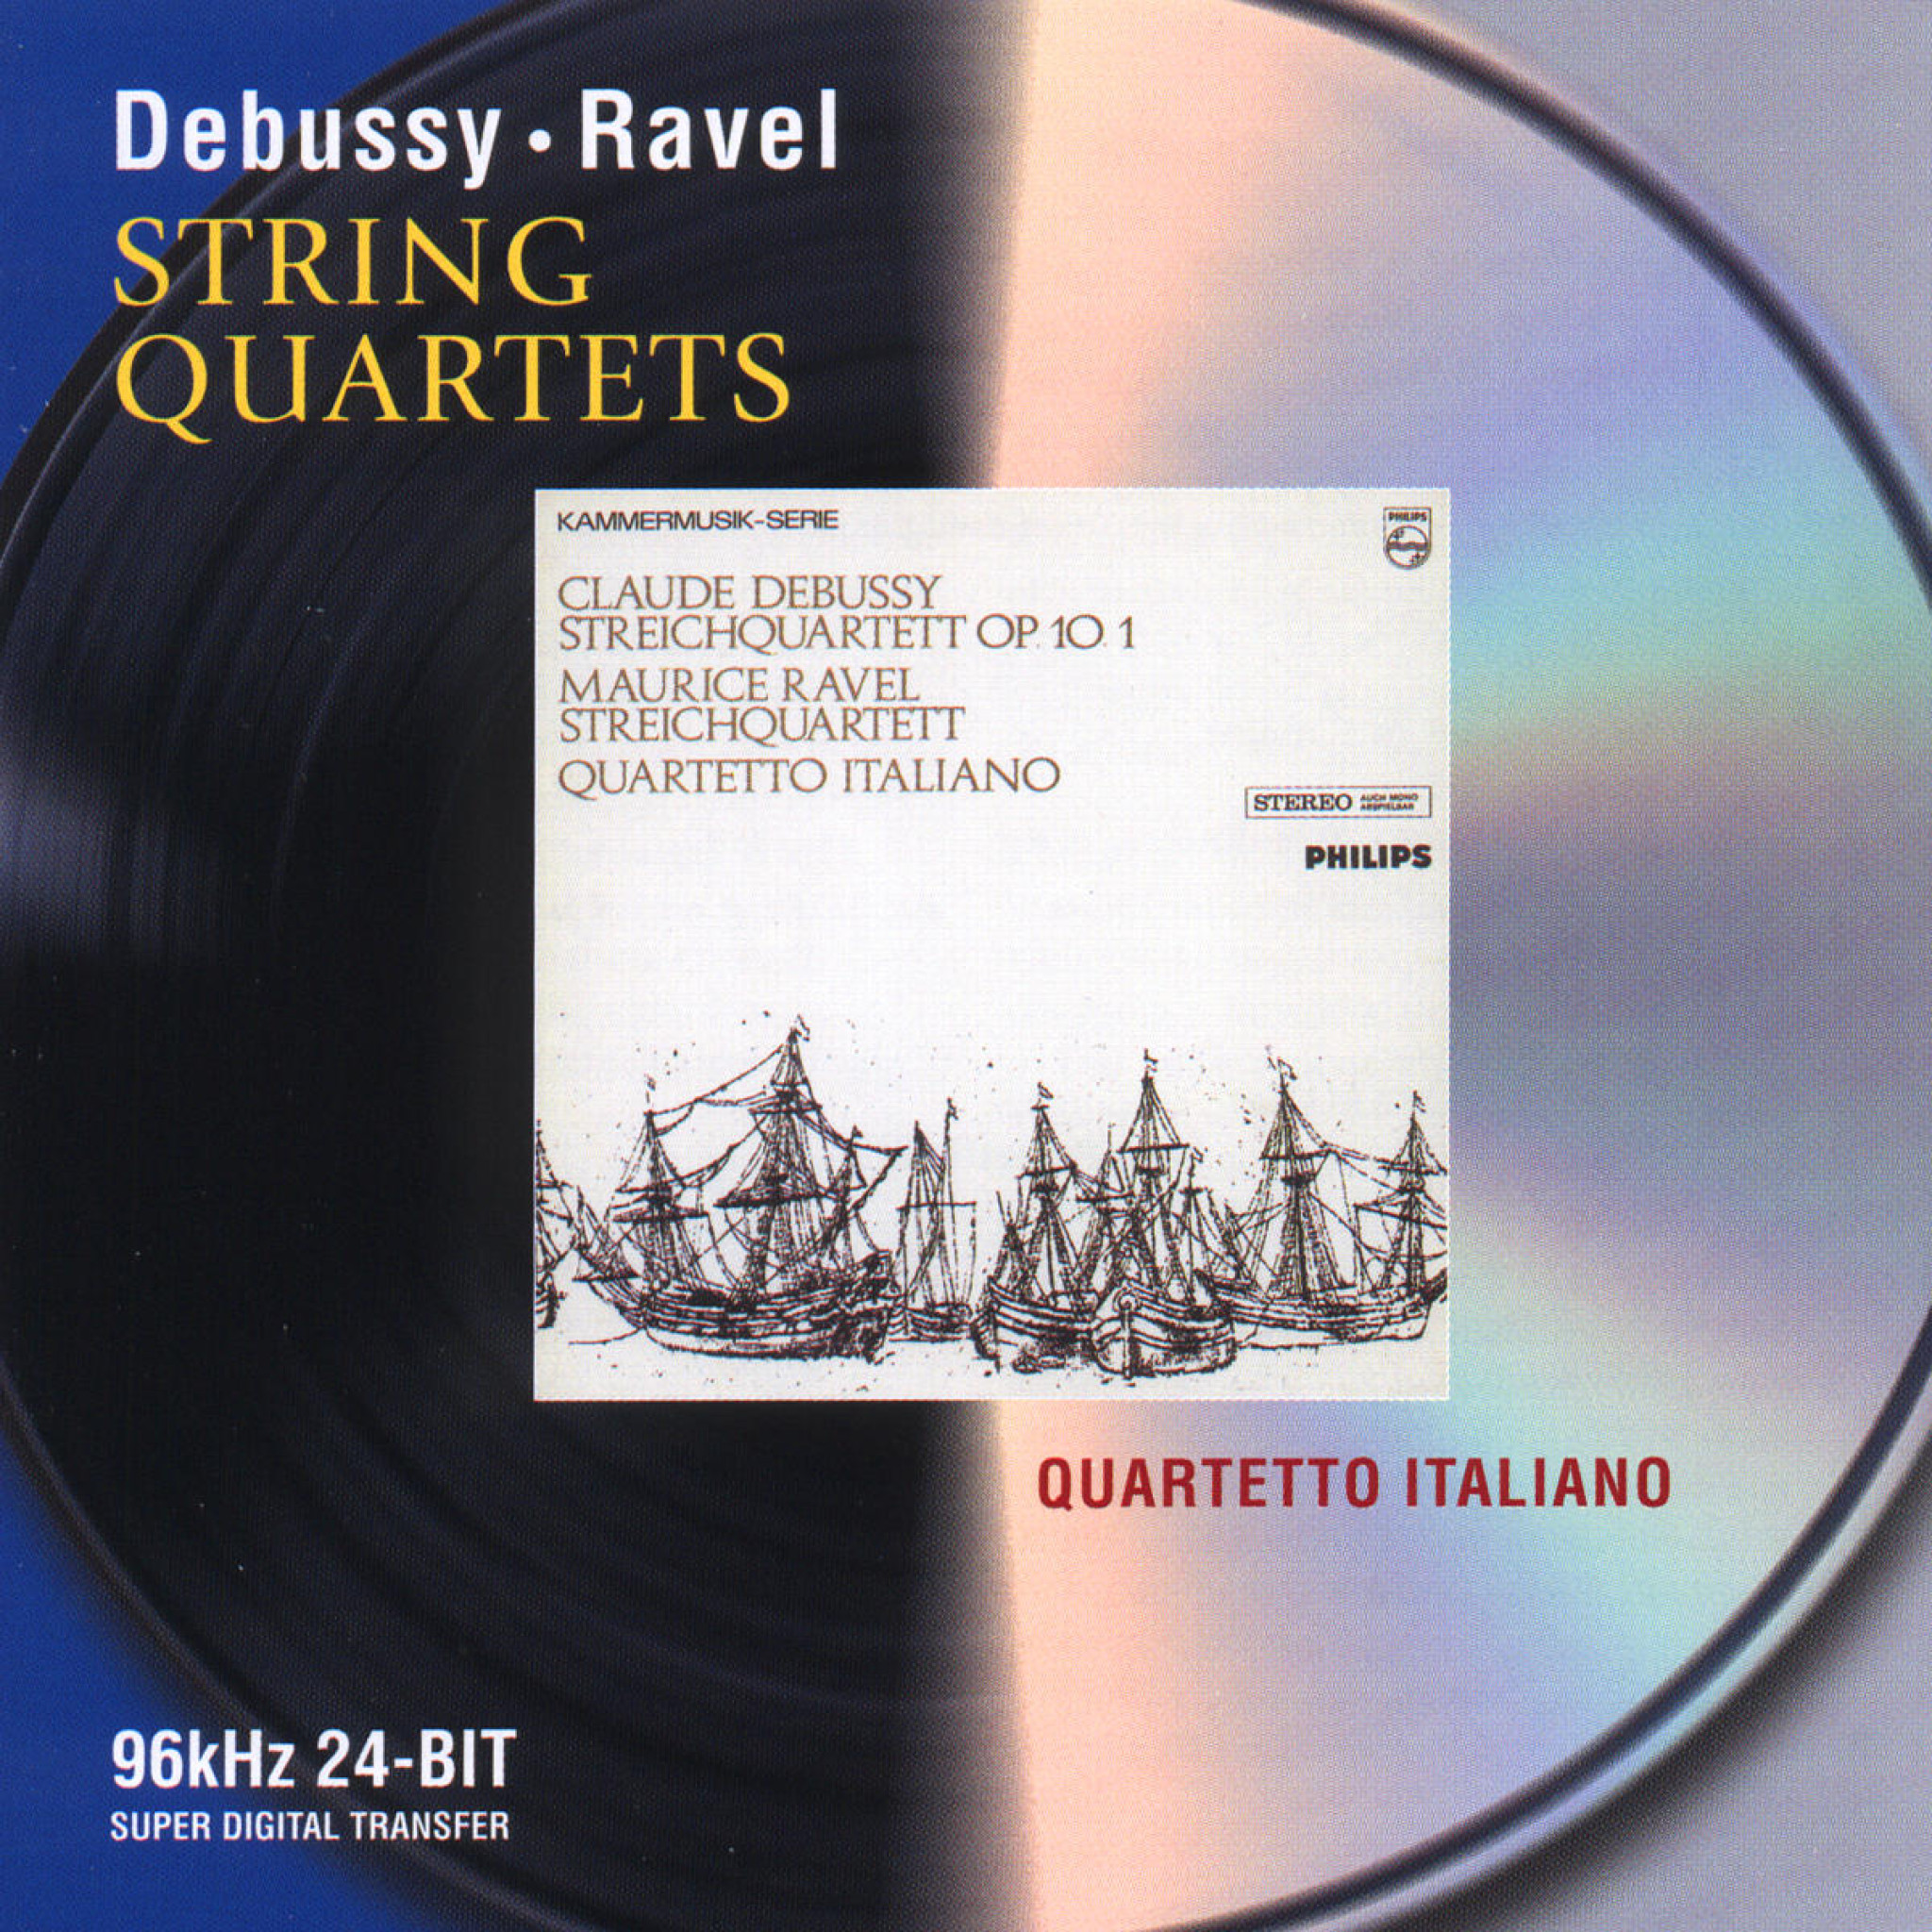 Debussy, Ravel /String Quartets/Quartetto Italiano